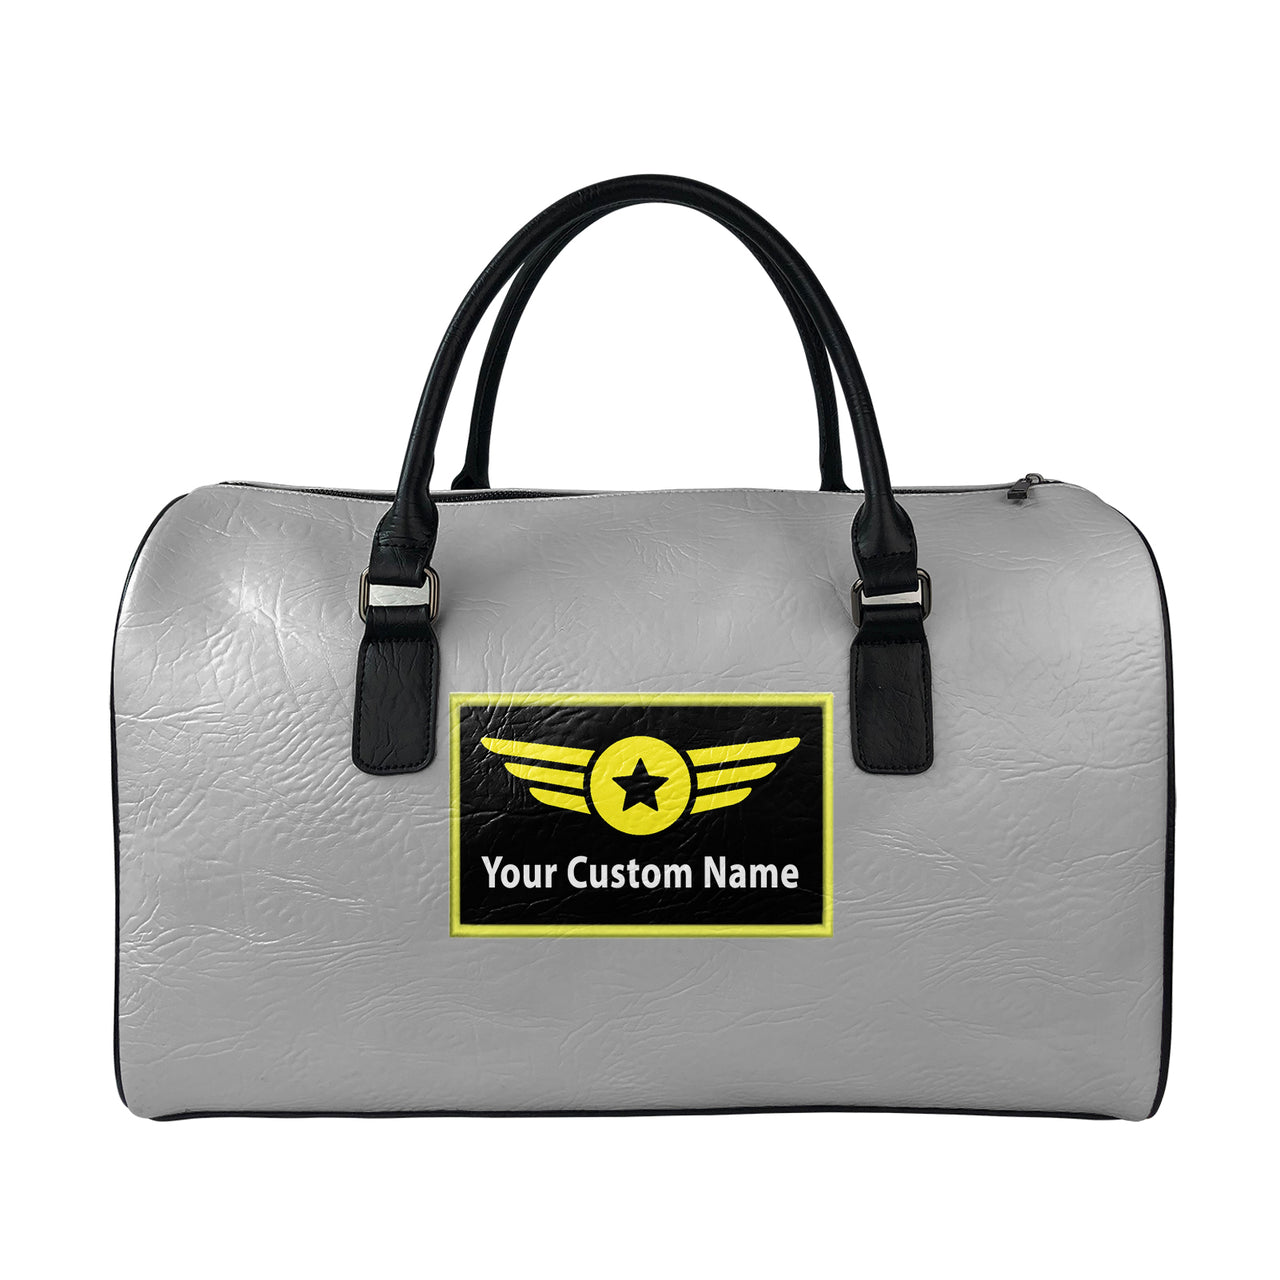 Custom Name (Special Badge) Designed Leather Travel Bag